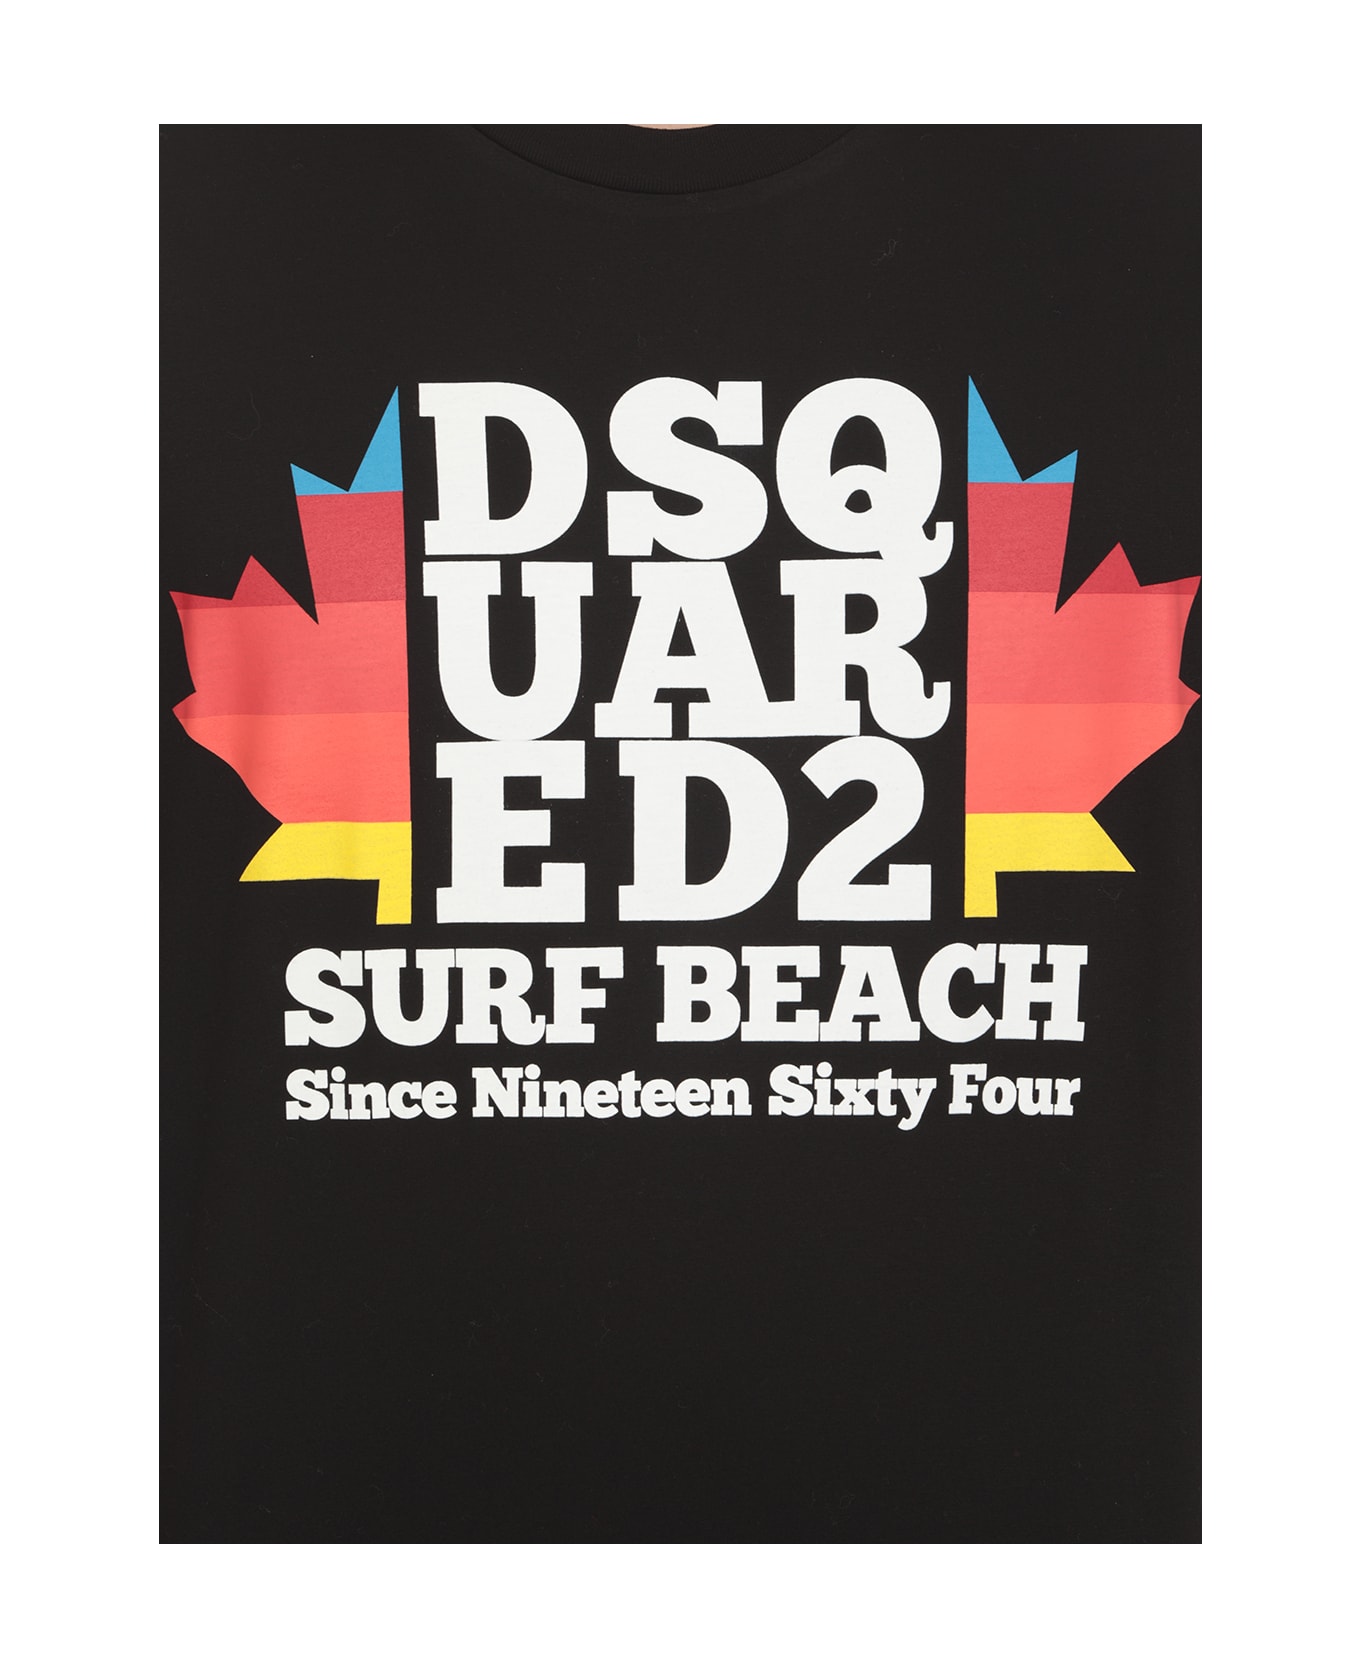 Dsquared2 Surf Beach T-shirt - BLACK